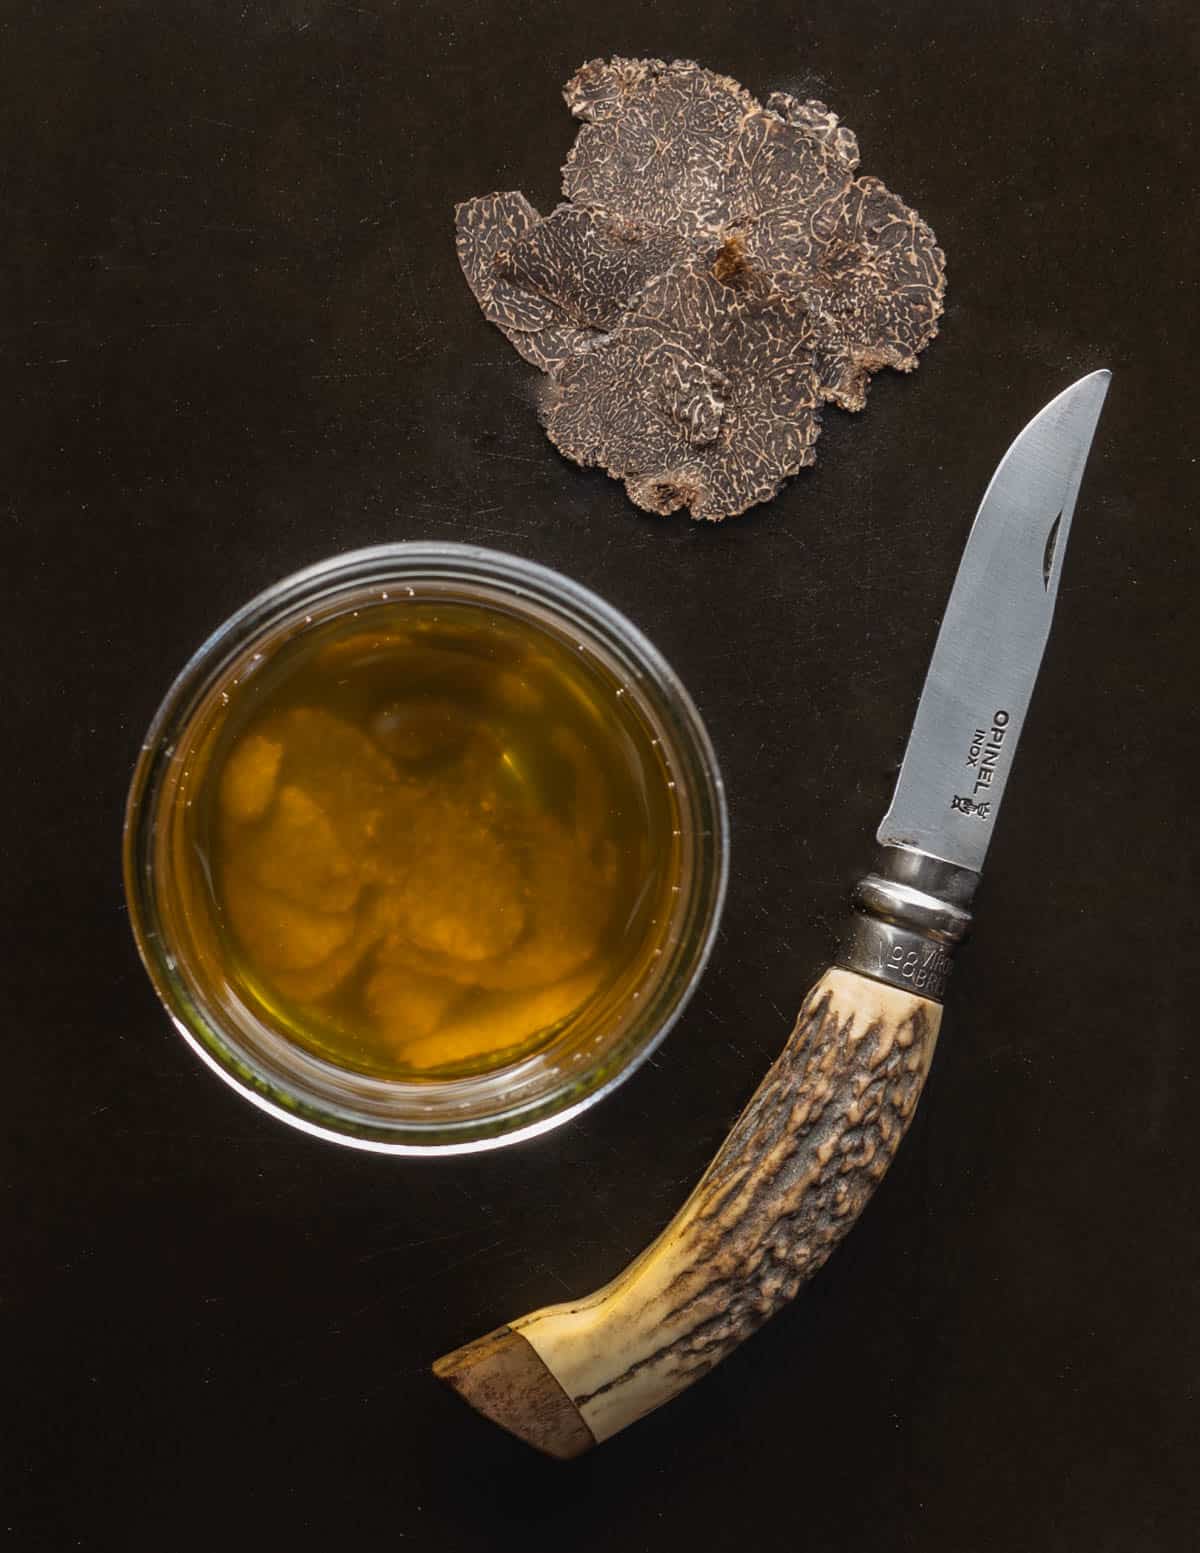 A knife next to sliced black perigord truffles and a jar of homemade black truffle oil.